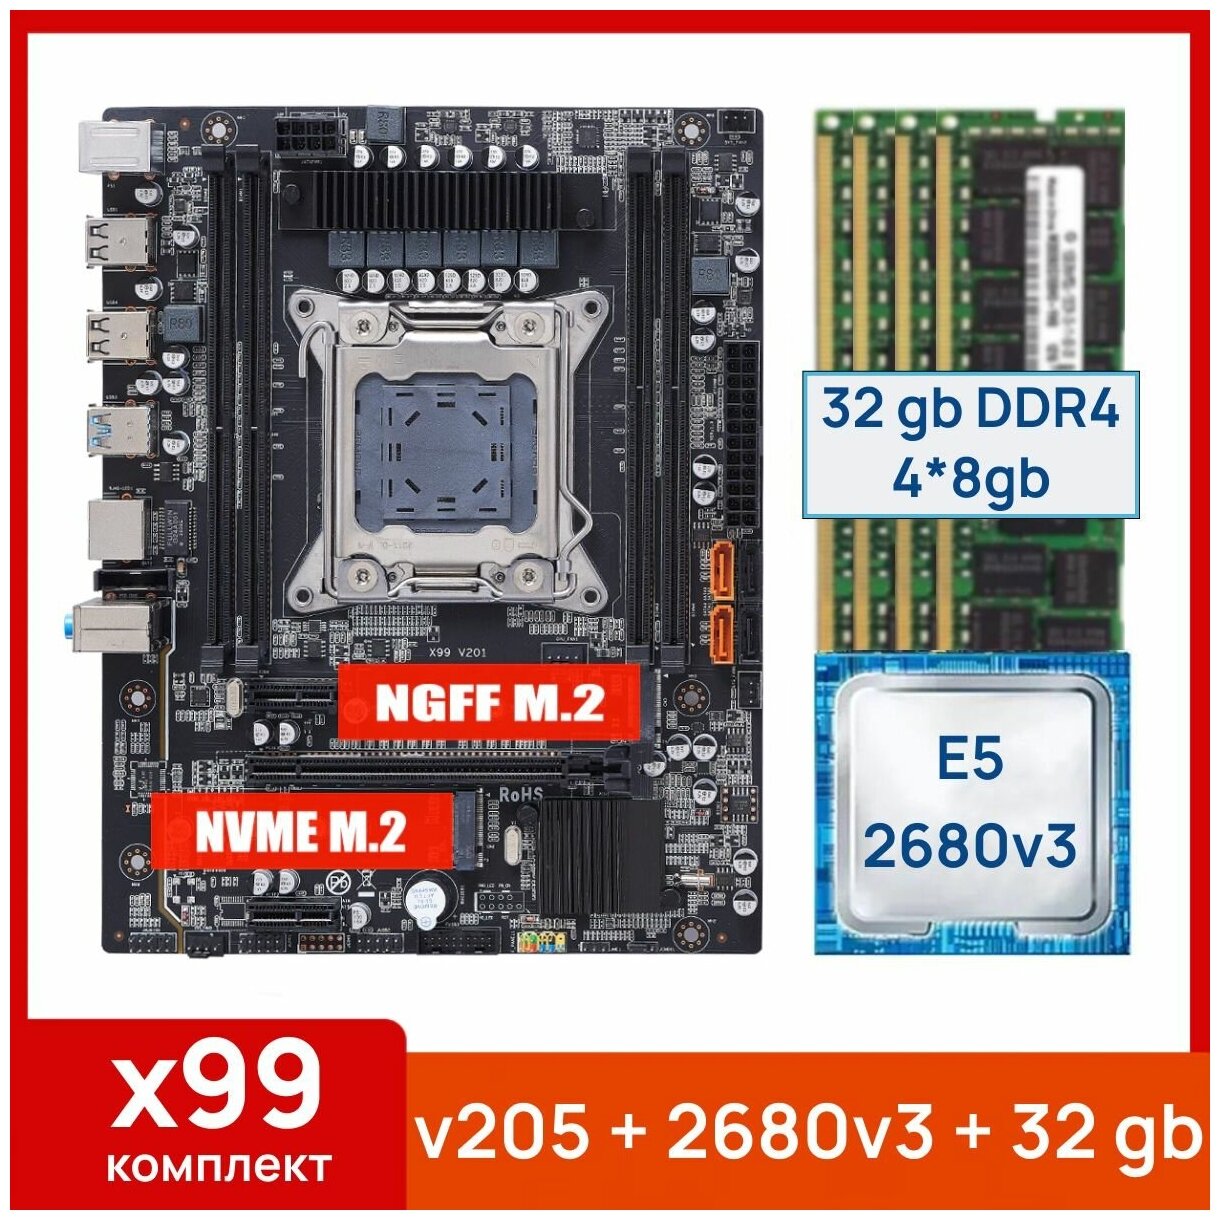 Комплект: Atermiter x99 v205 + Xeon E5 2680v3 + 32 gb(4x8gb) DDR4 ecc reg